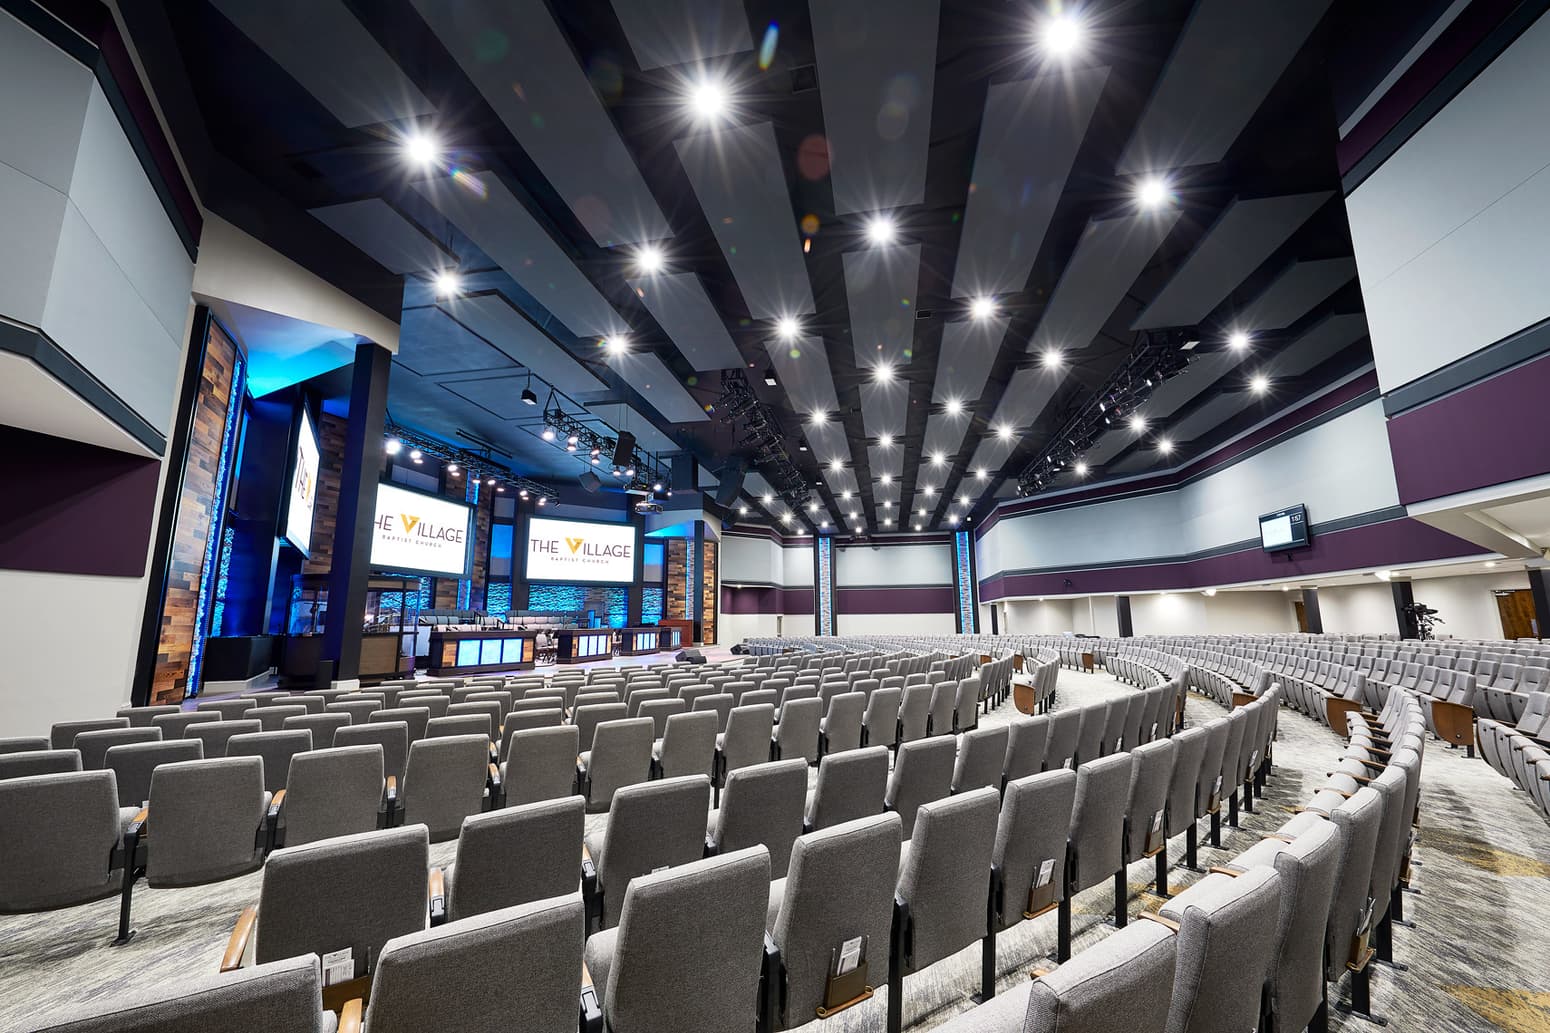 Church audio visual companies like Paragon 360 work wonders, as seen in this auditorium photo.